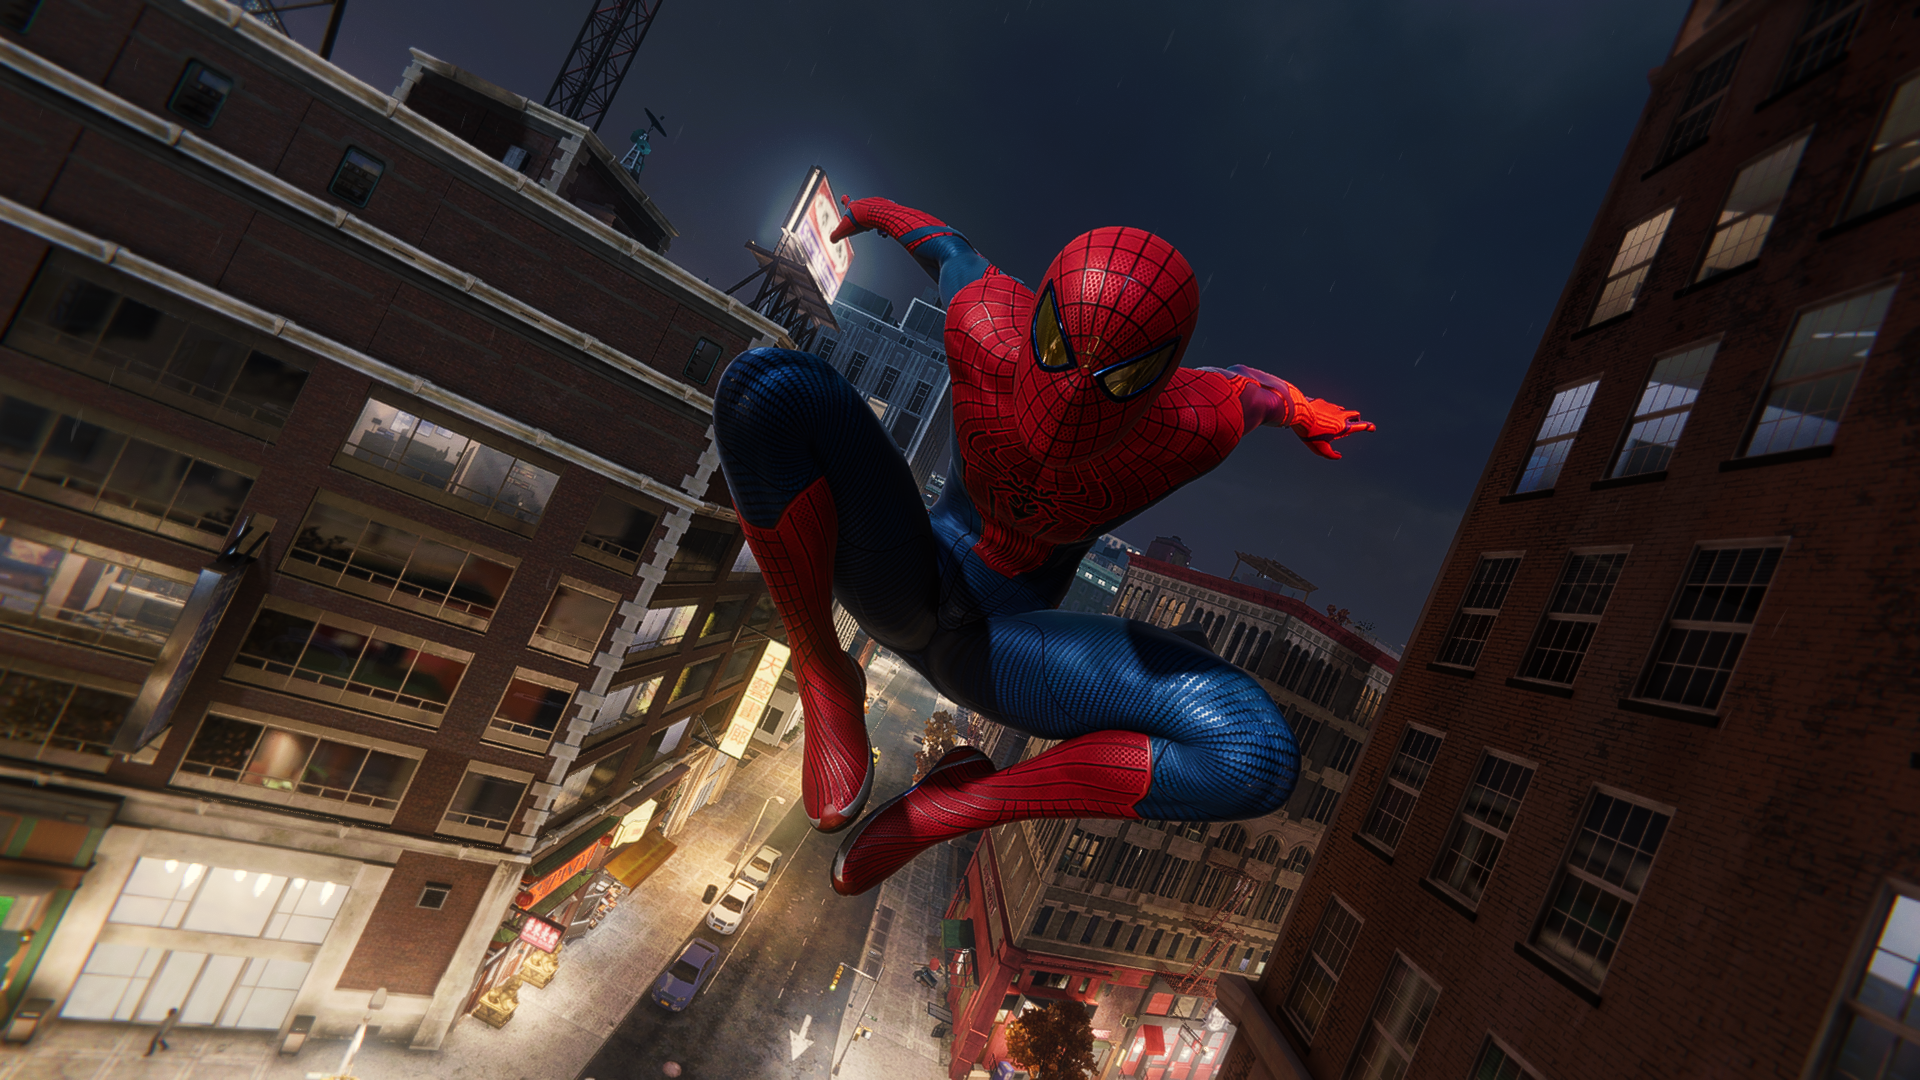 General 1920x1080 Spider-Man Spider-Man (2018) Marvel Comics PlayStation bodysuit superhero night building street city CGI